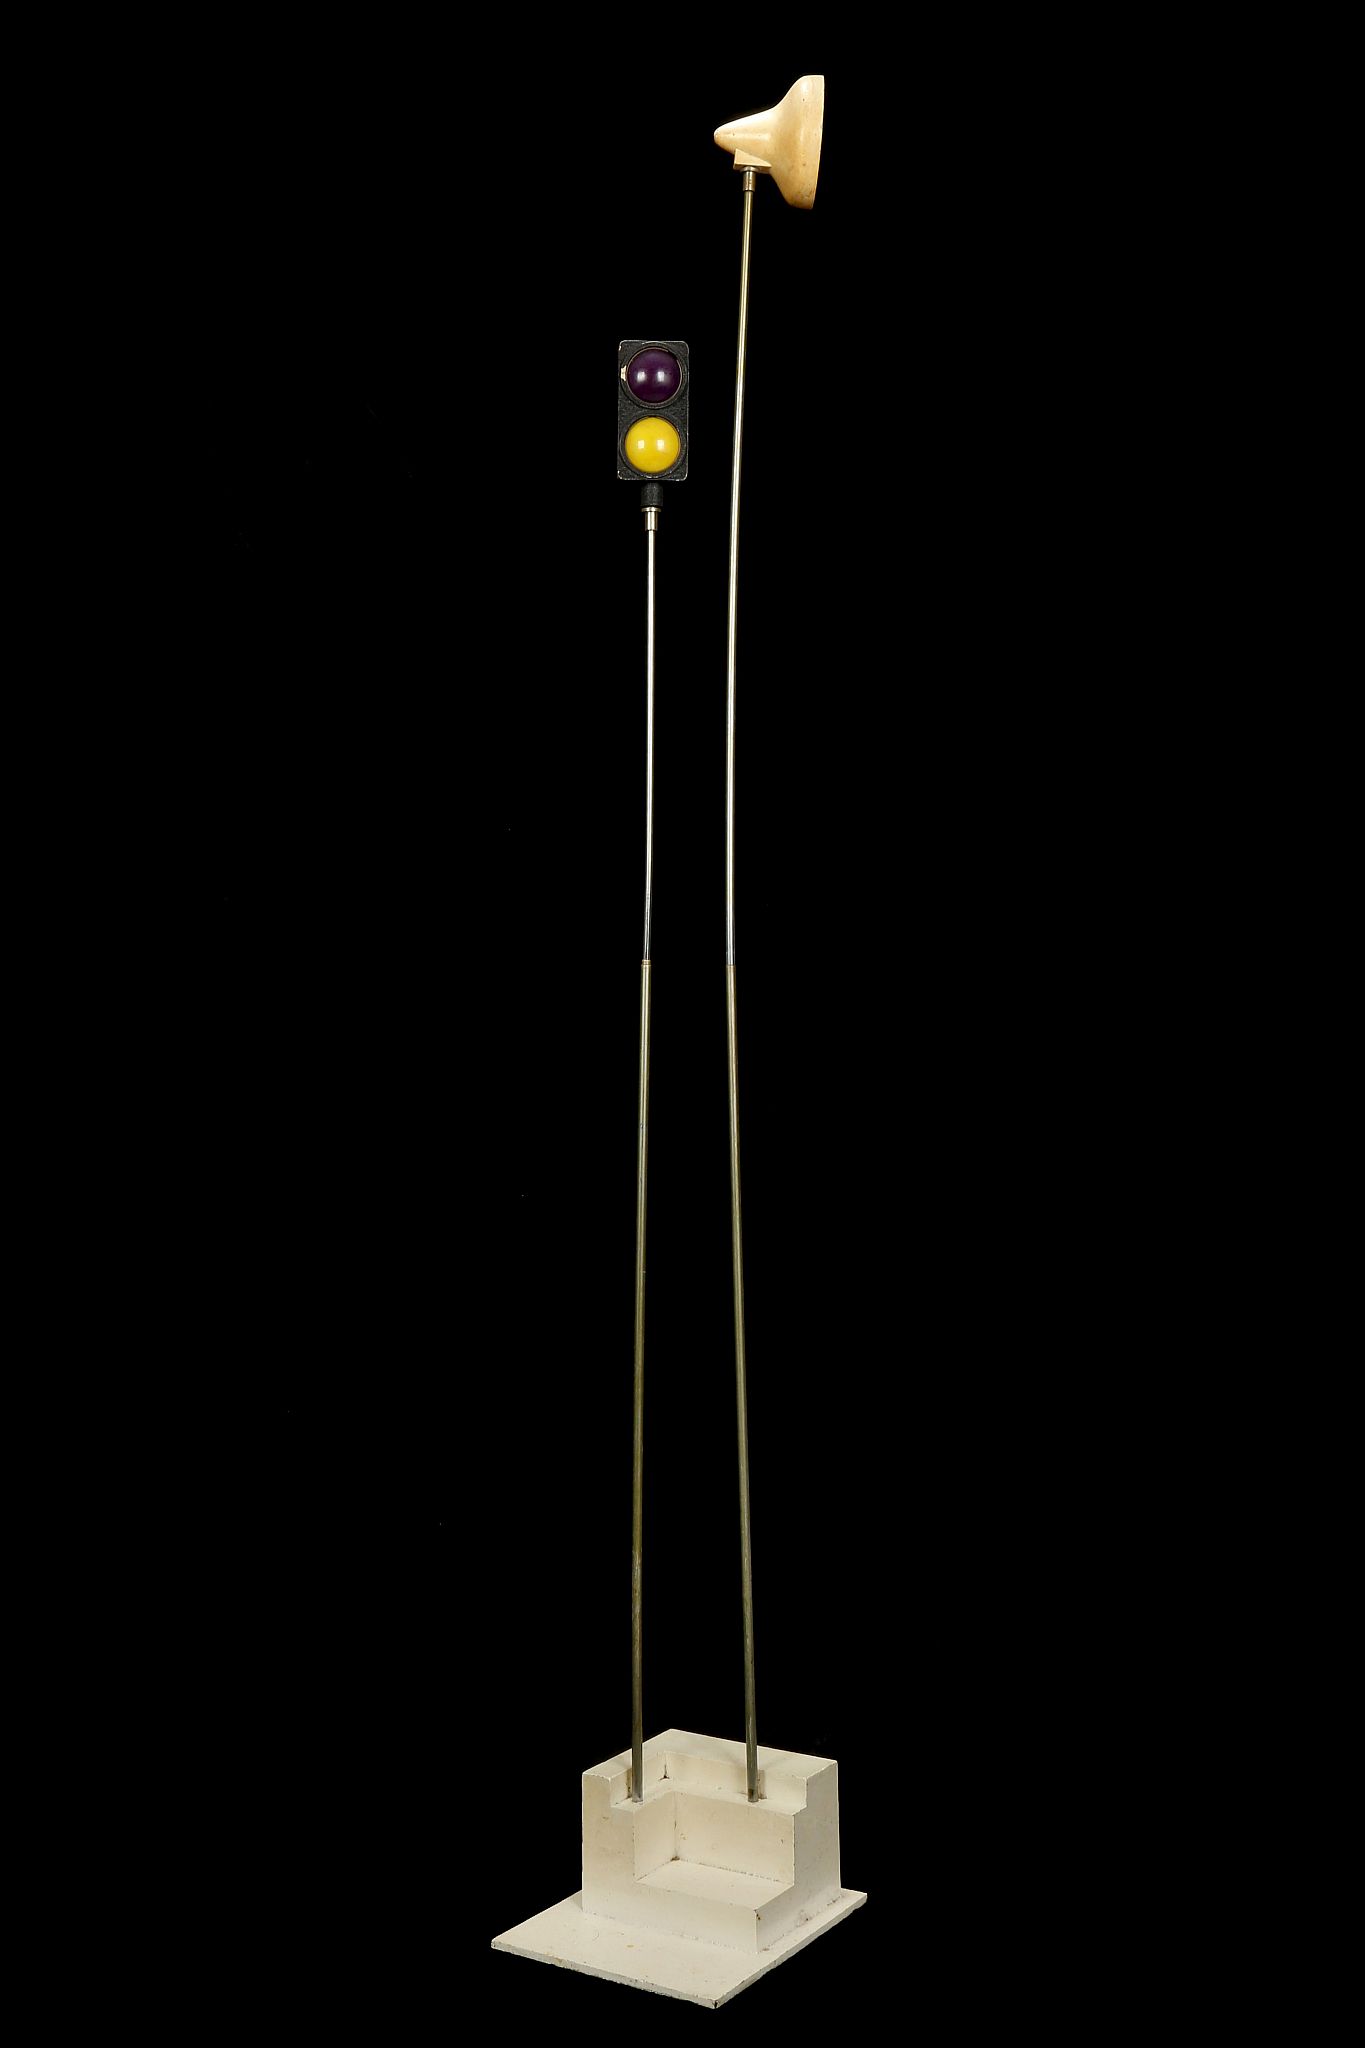 VASSILAKIS TAKIS (GREEK, b.1925), 'SIGNAL', cast aluminium lights with coloured perspex lenses,